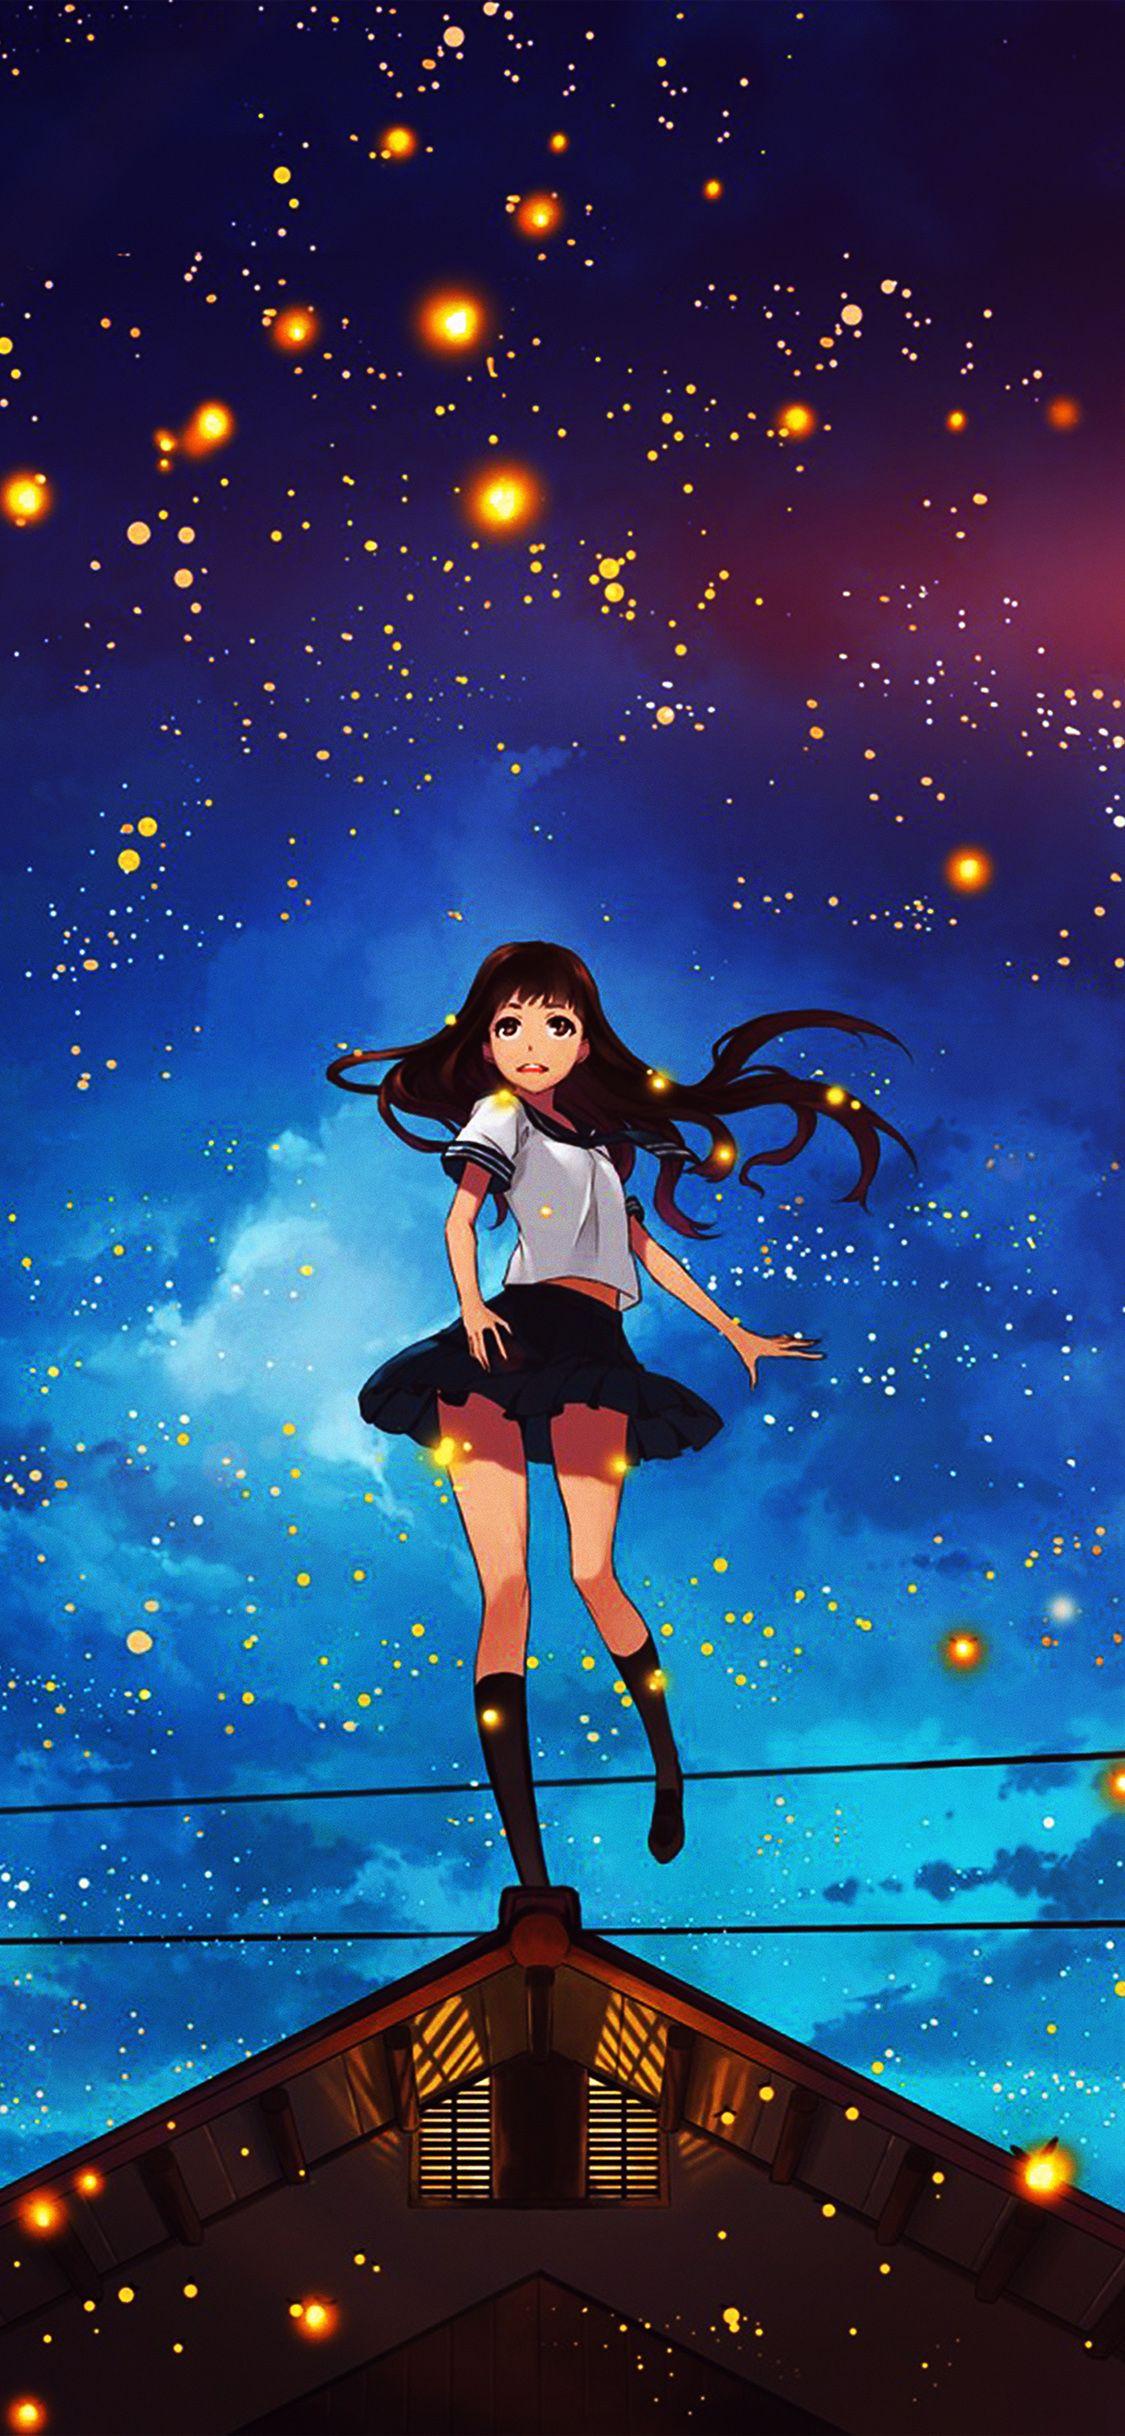 Anime Girl Wallpaper Iphone 11 Pro Max - Anime Wallpaper HD